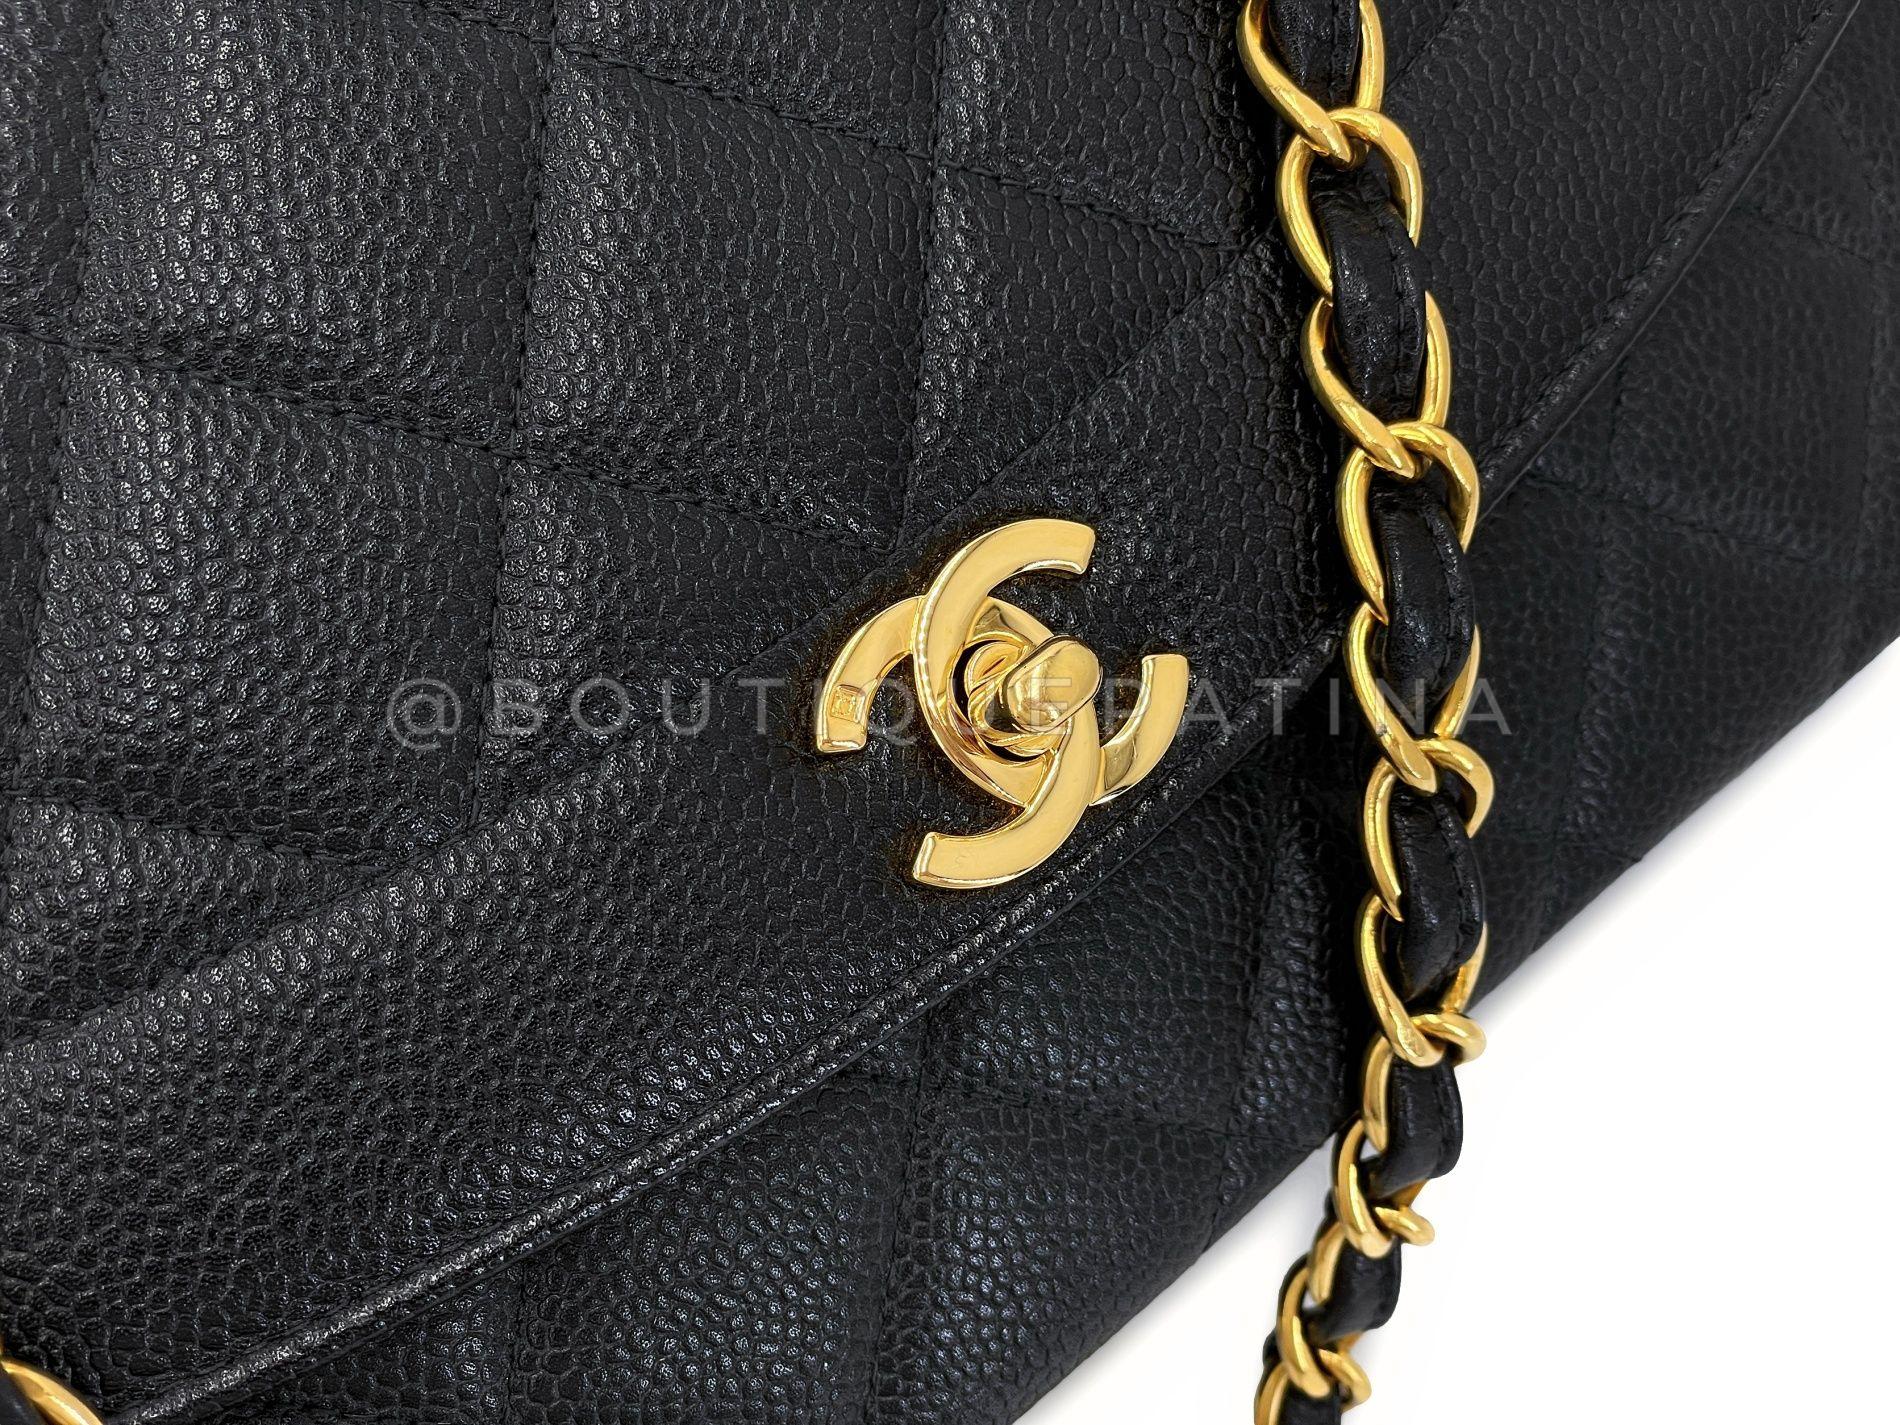 Rare Chanel 1997 Vintage Large Jumbo Black Caviar Diana Flap Bag 24k GHW 68110 For Sale 4